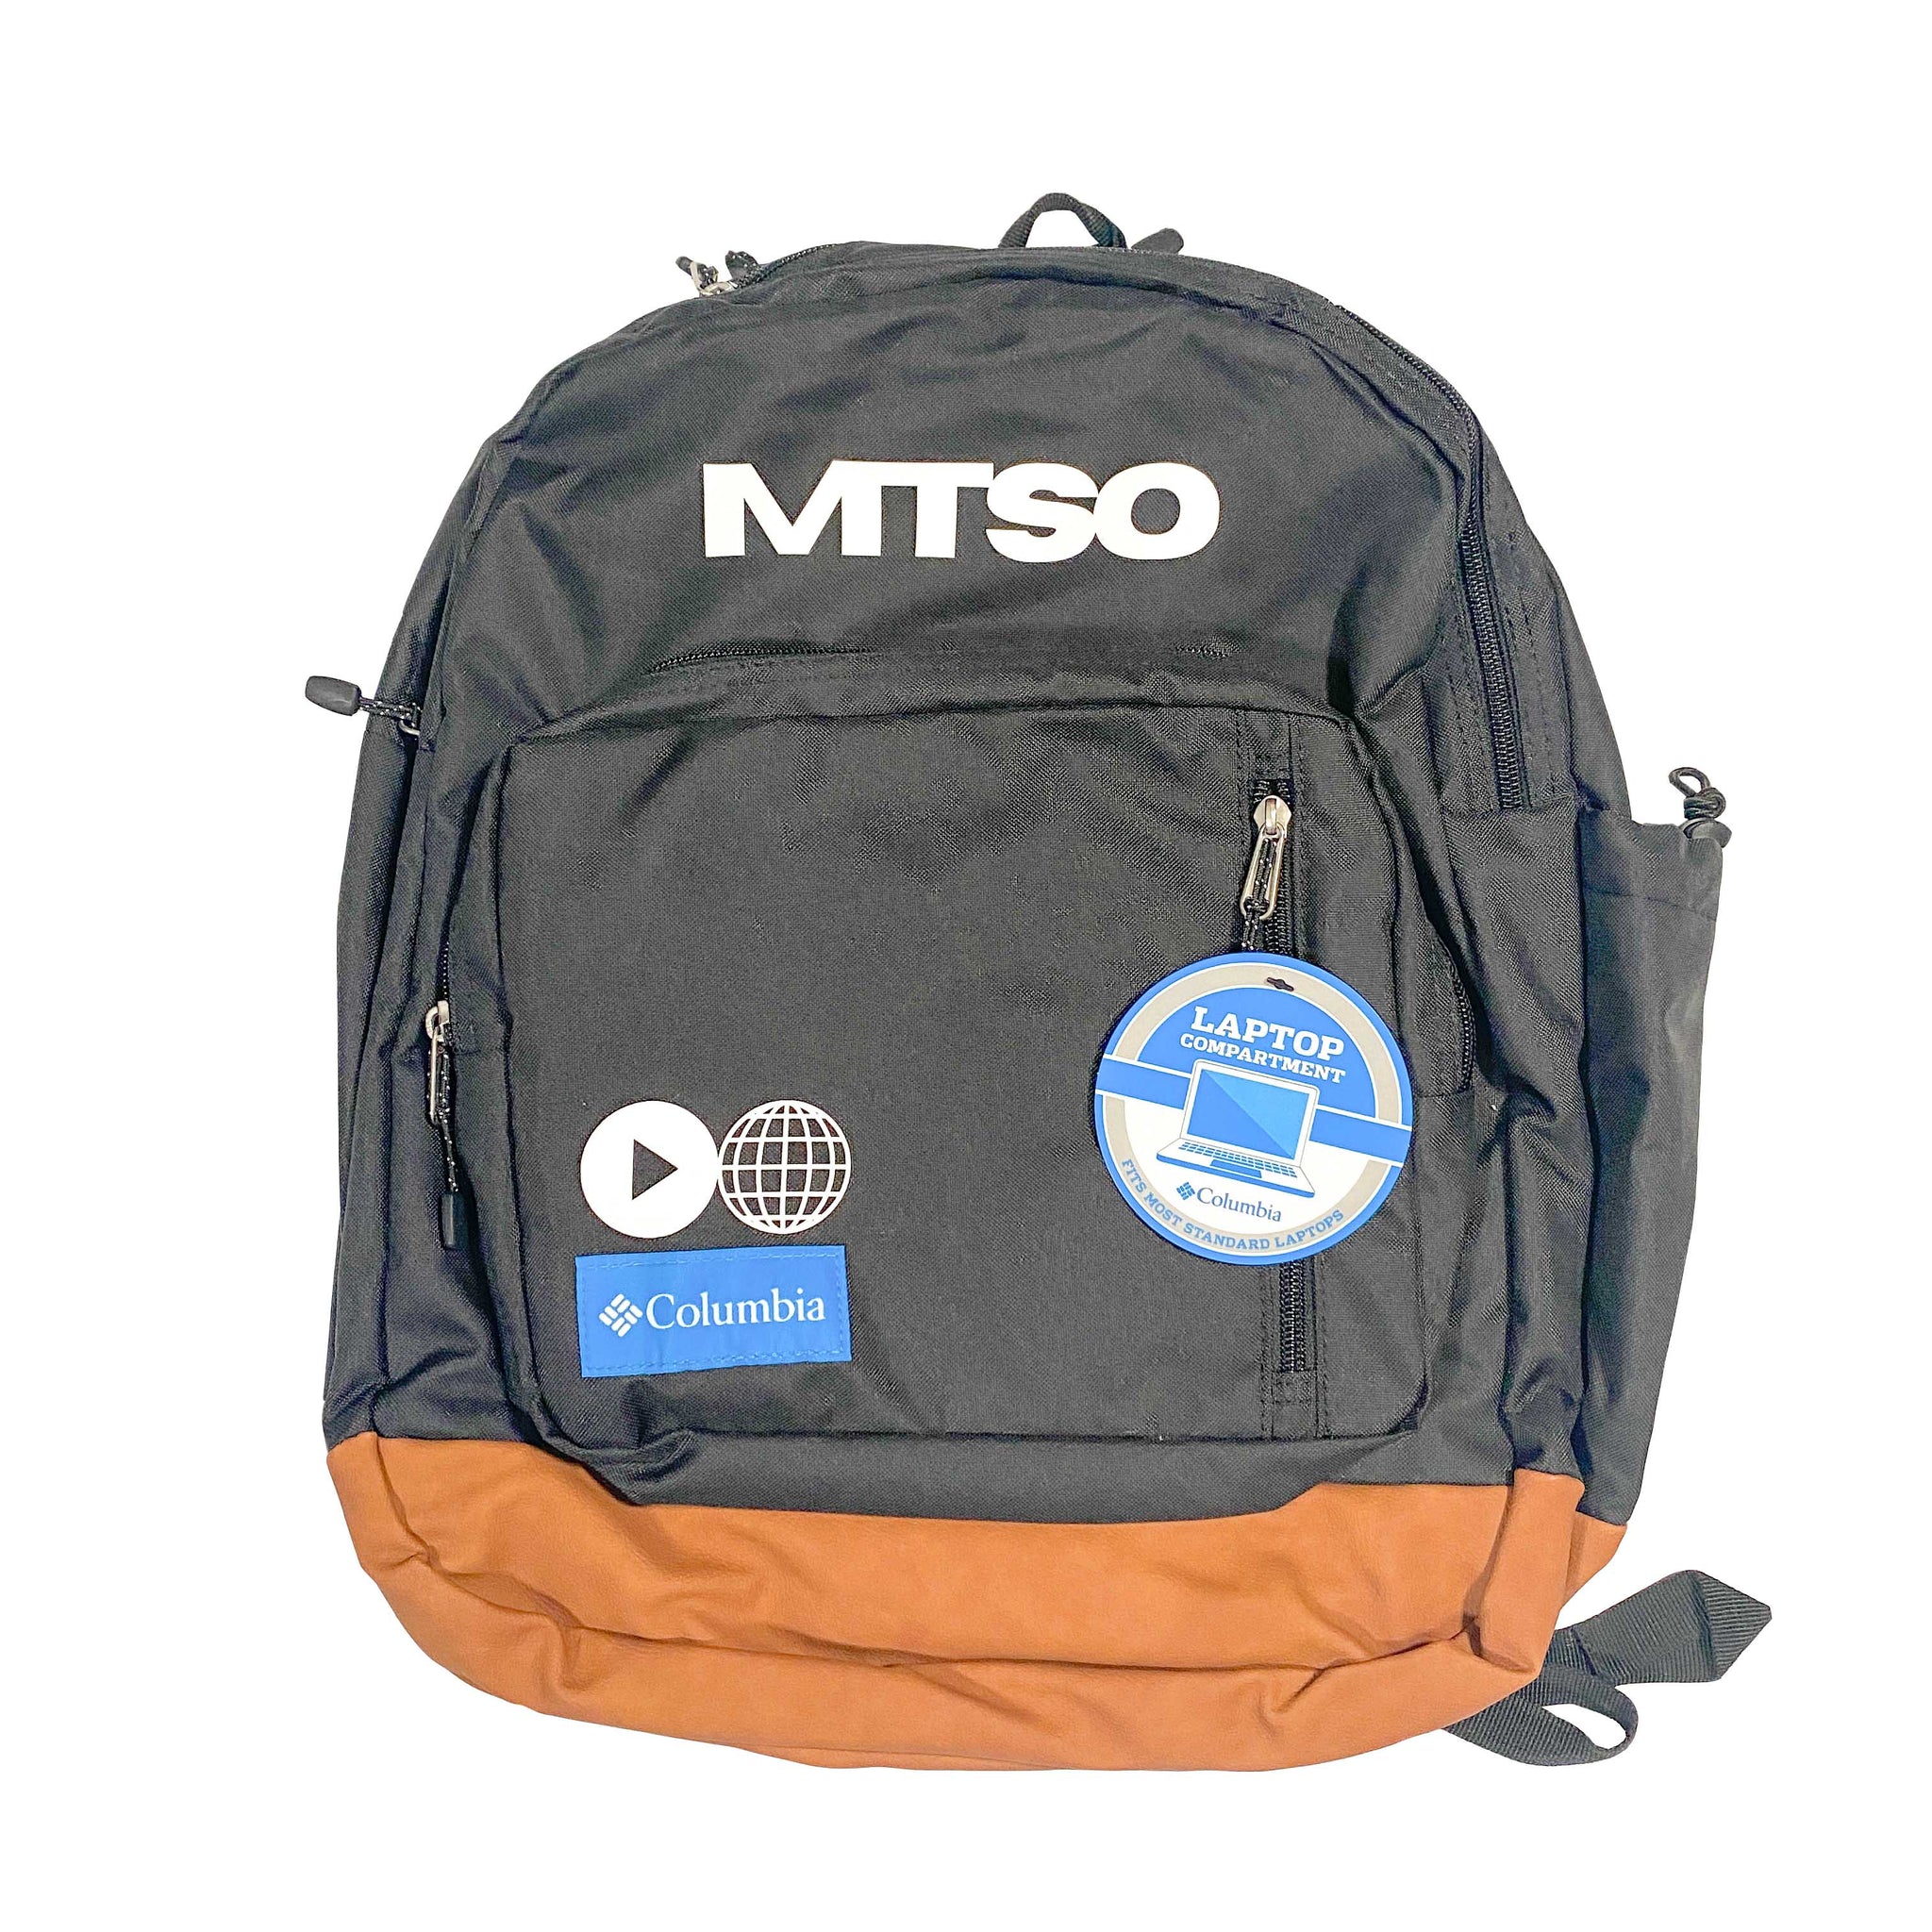 Columbia X MTSO Backpack - Black